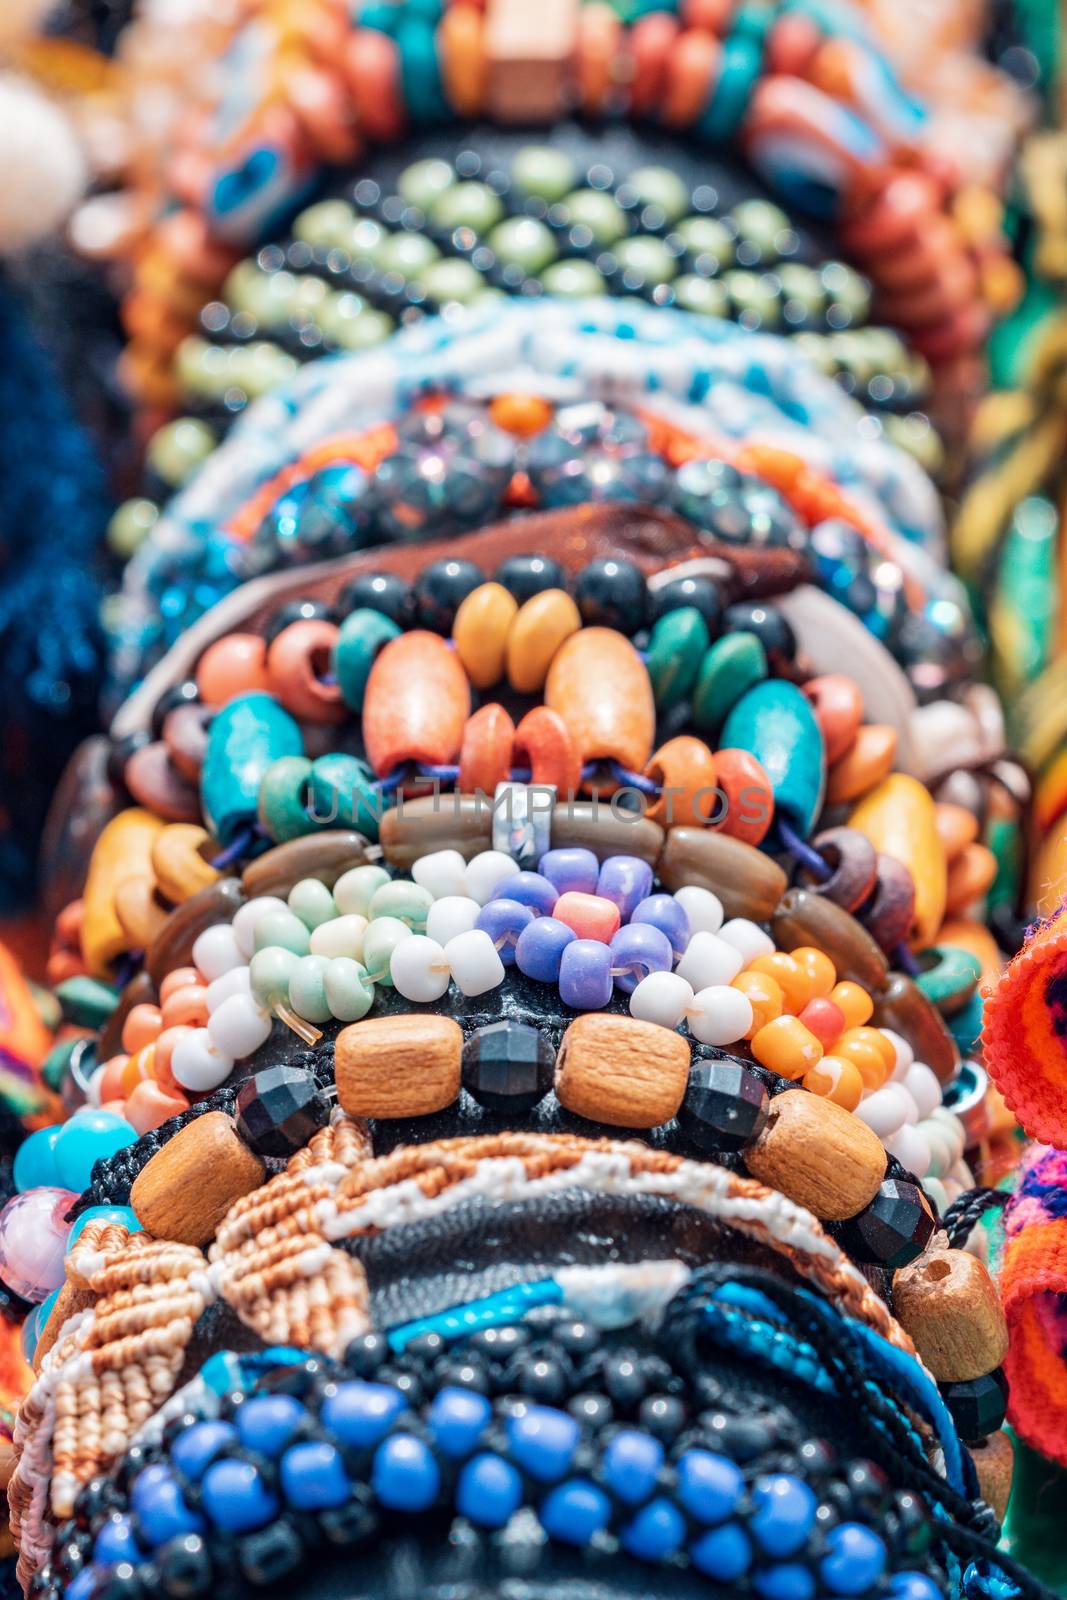 Andean bracelets and crafts - Cajamarca Peru by nuelcruz